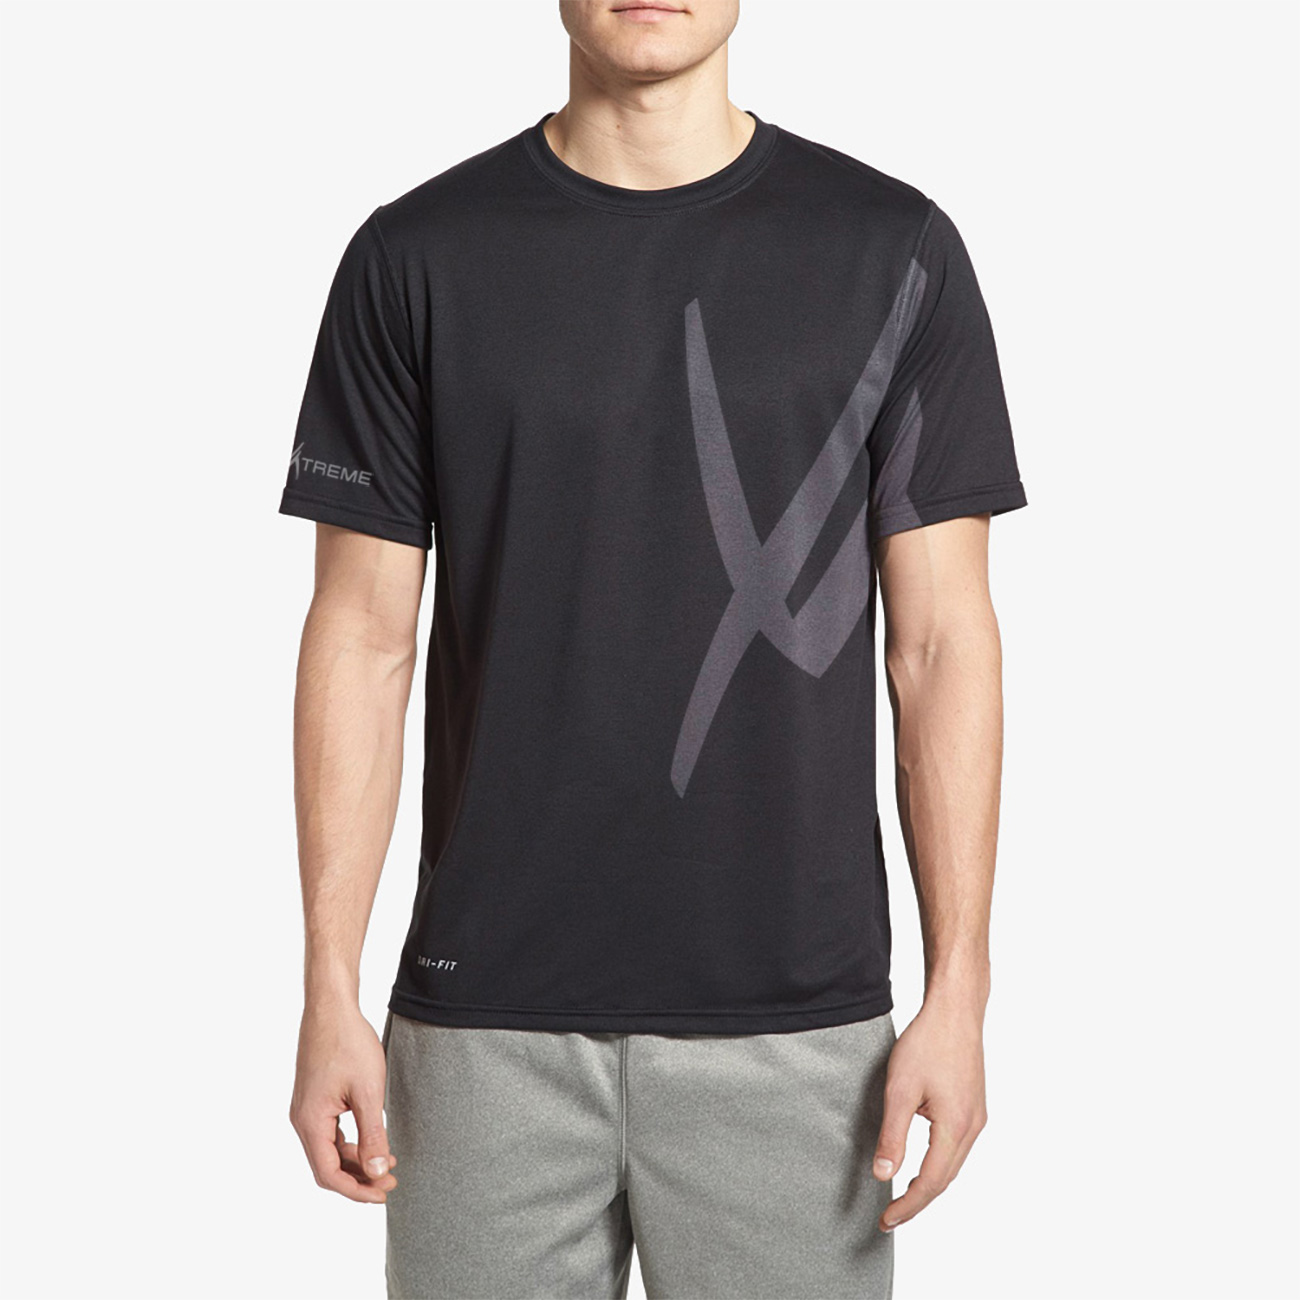 Vextreme | Shirt Design 3